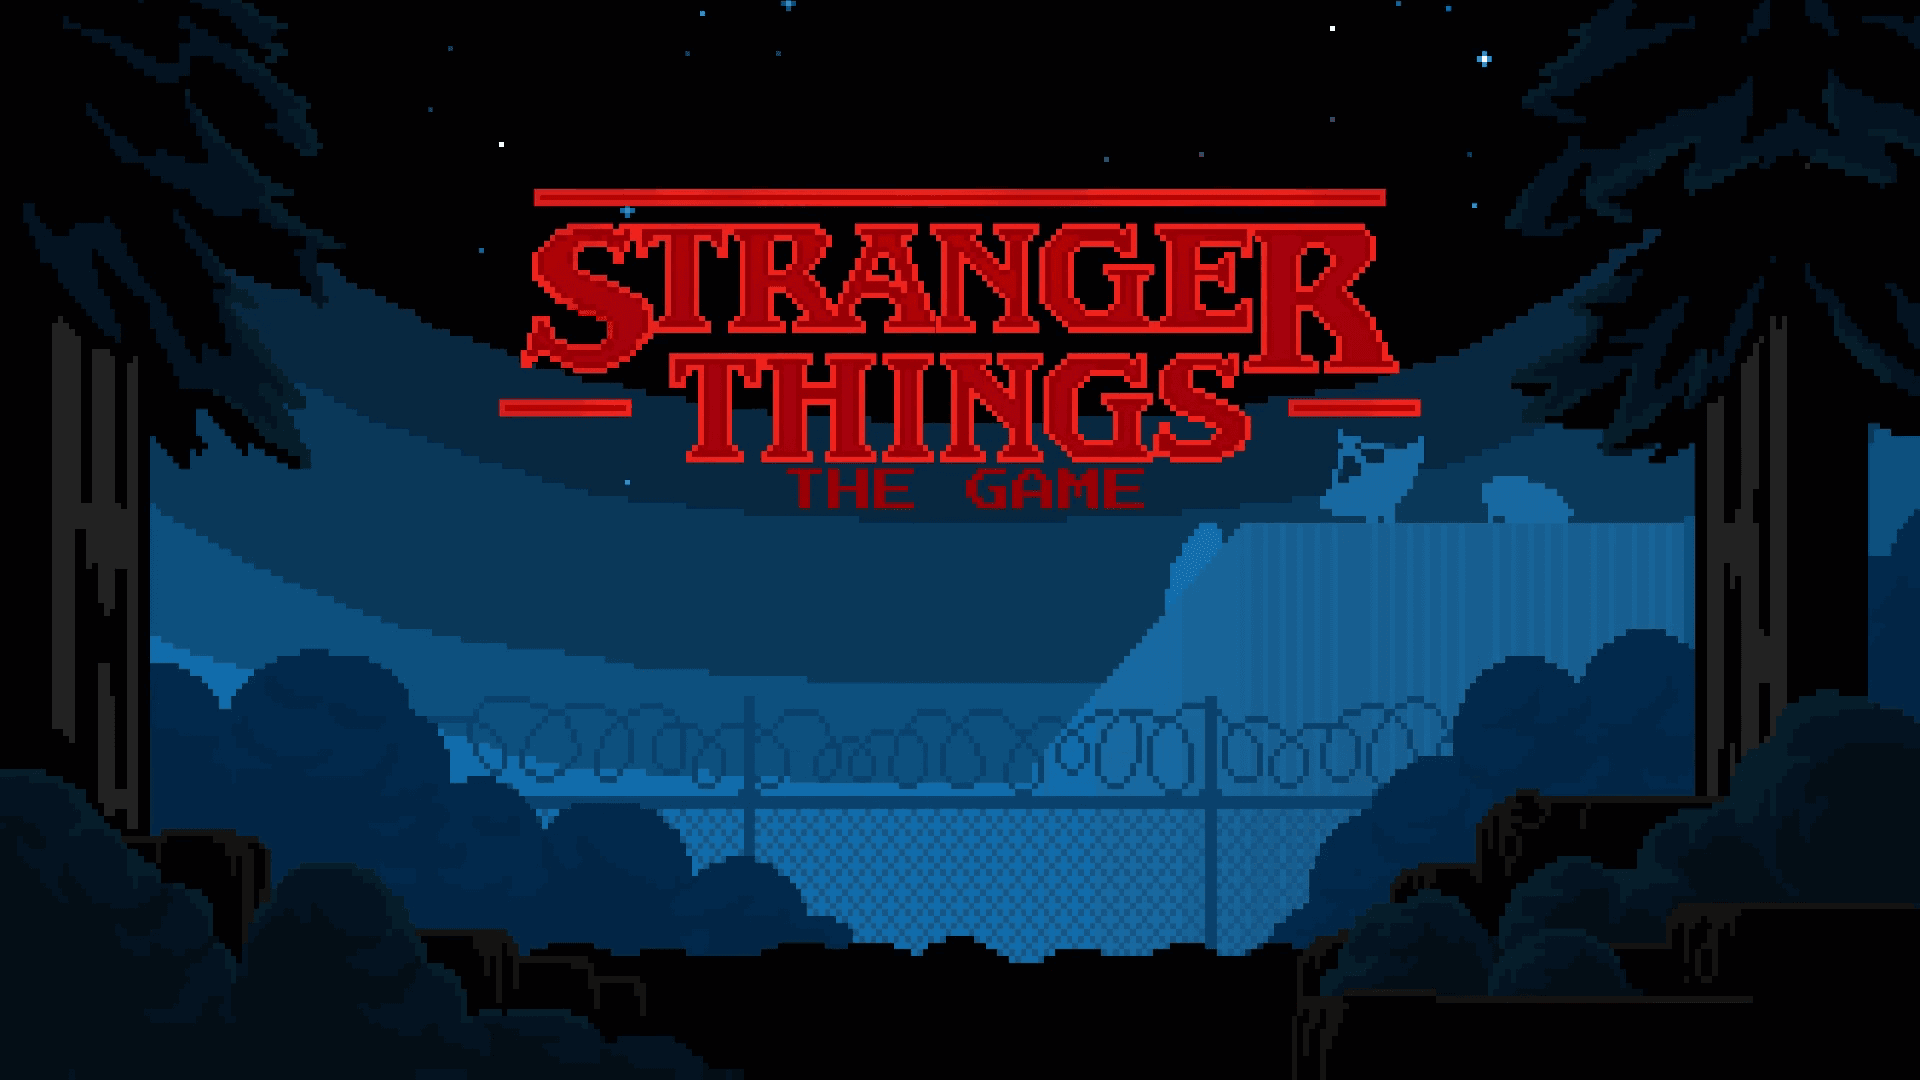 Stranger Things 3 The Game Nintendo Switch Version Full Game Free Download